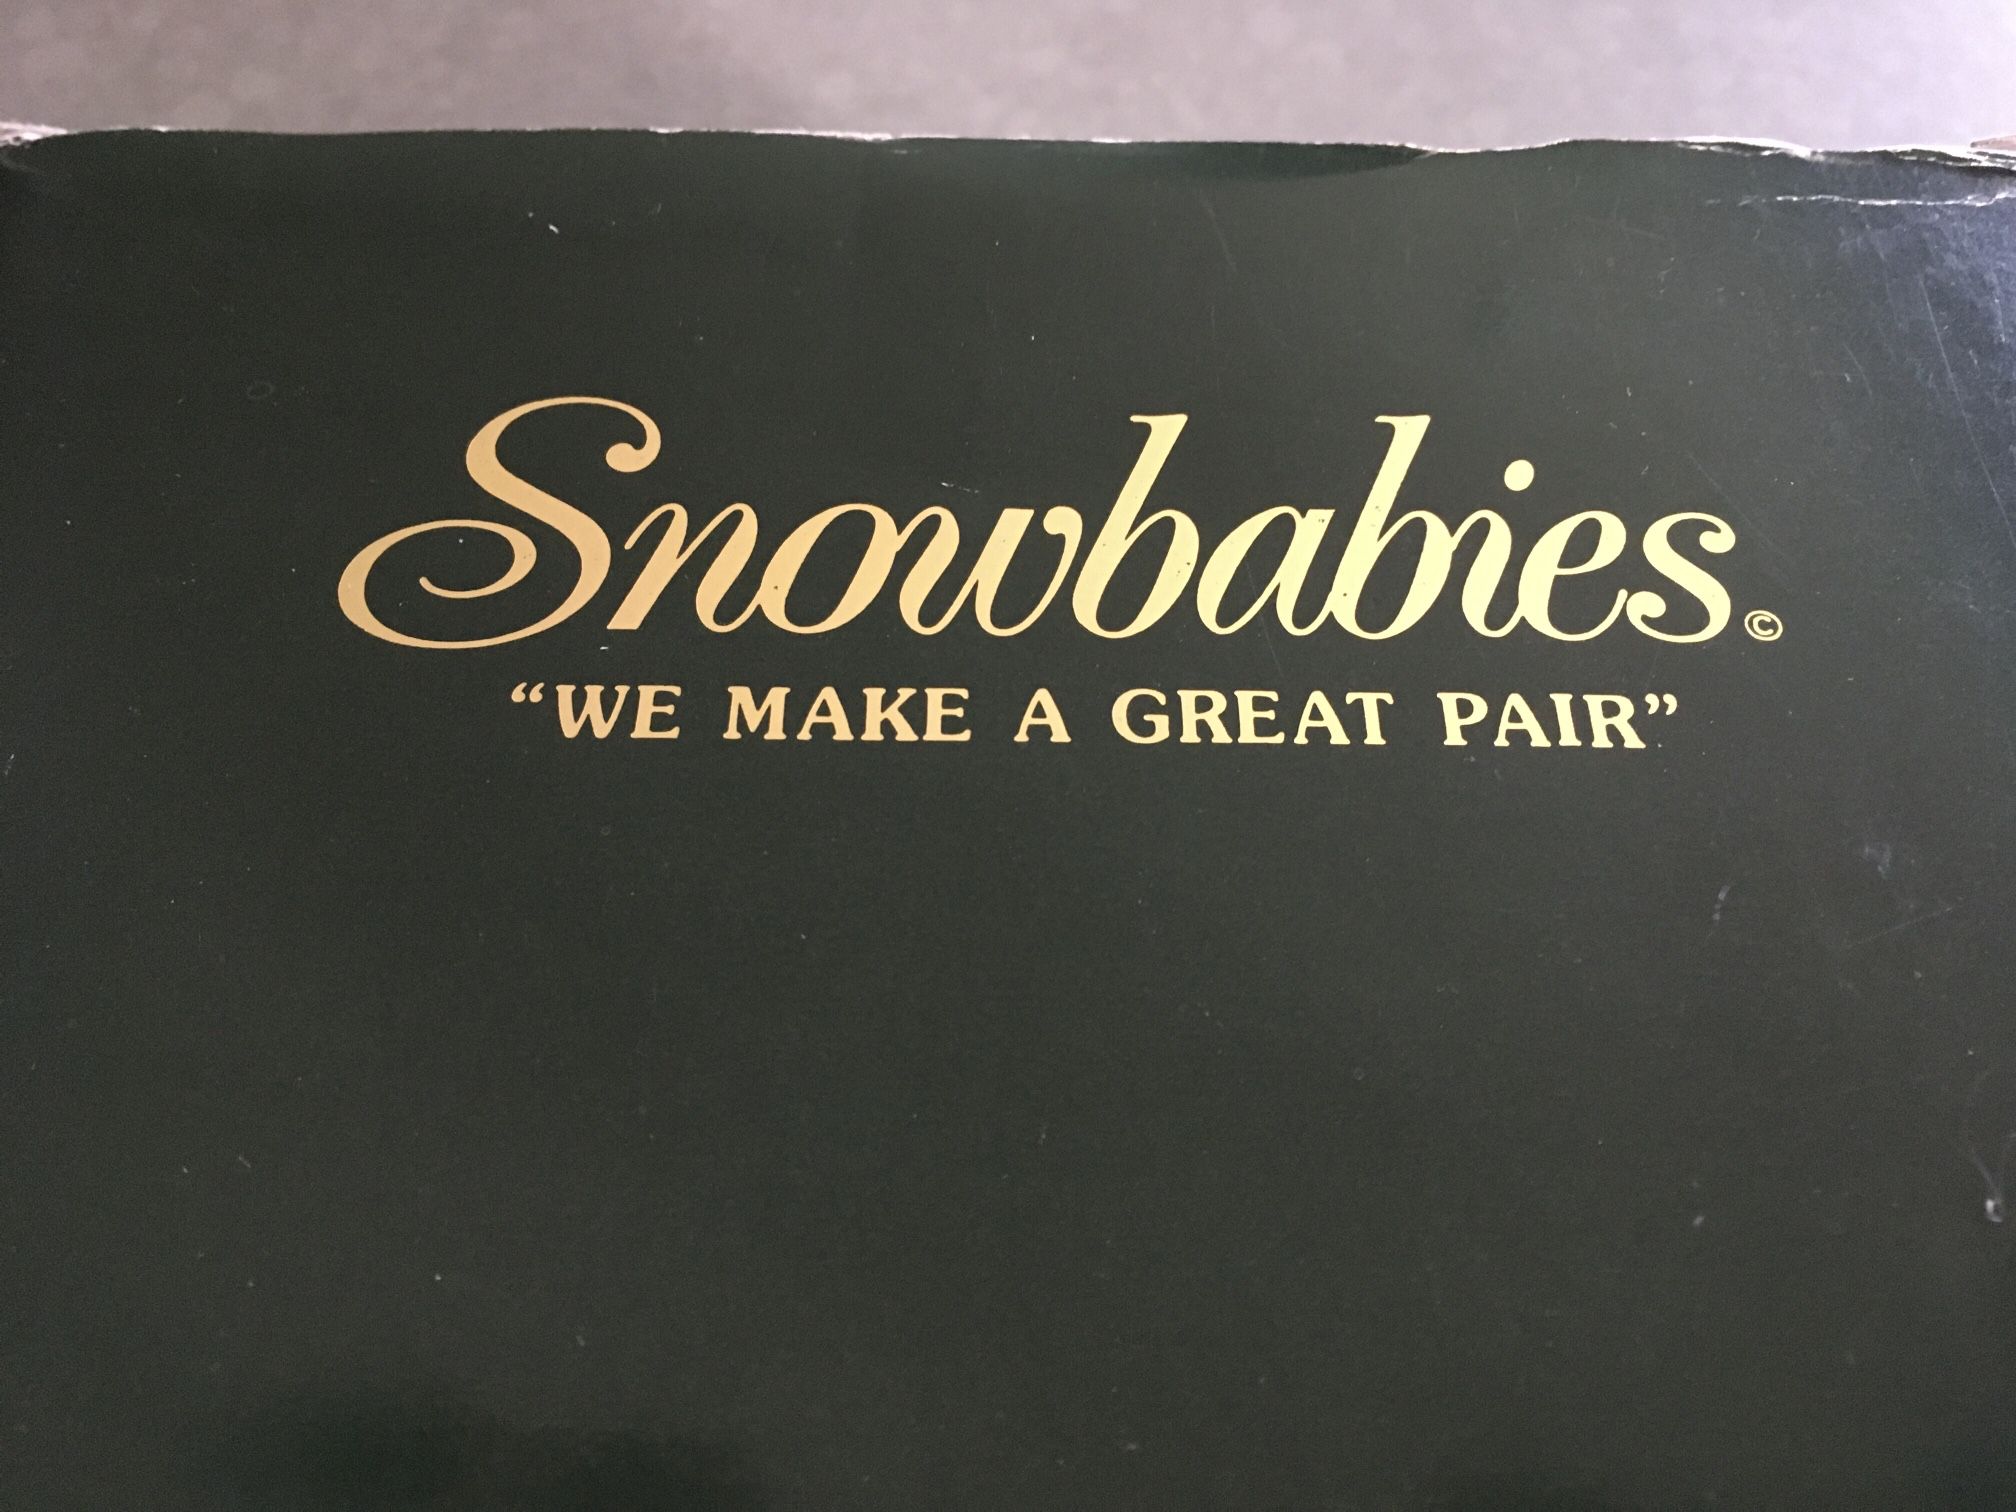 Snowbabies “We Make A Great Pair”